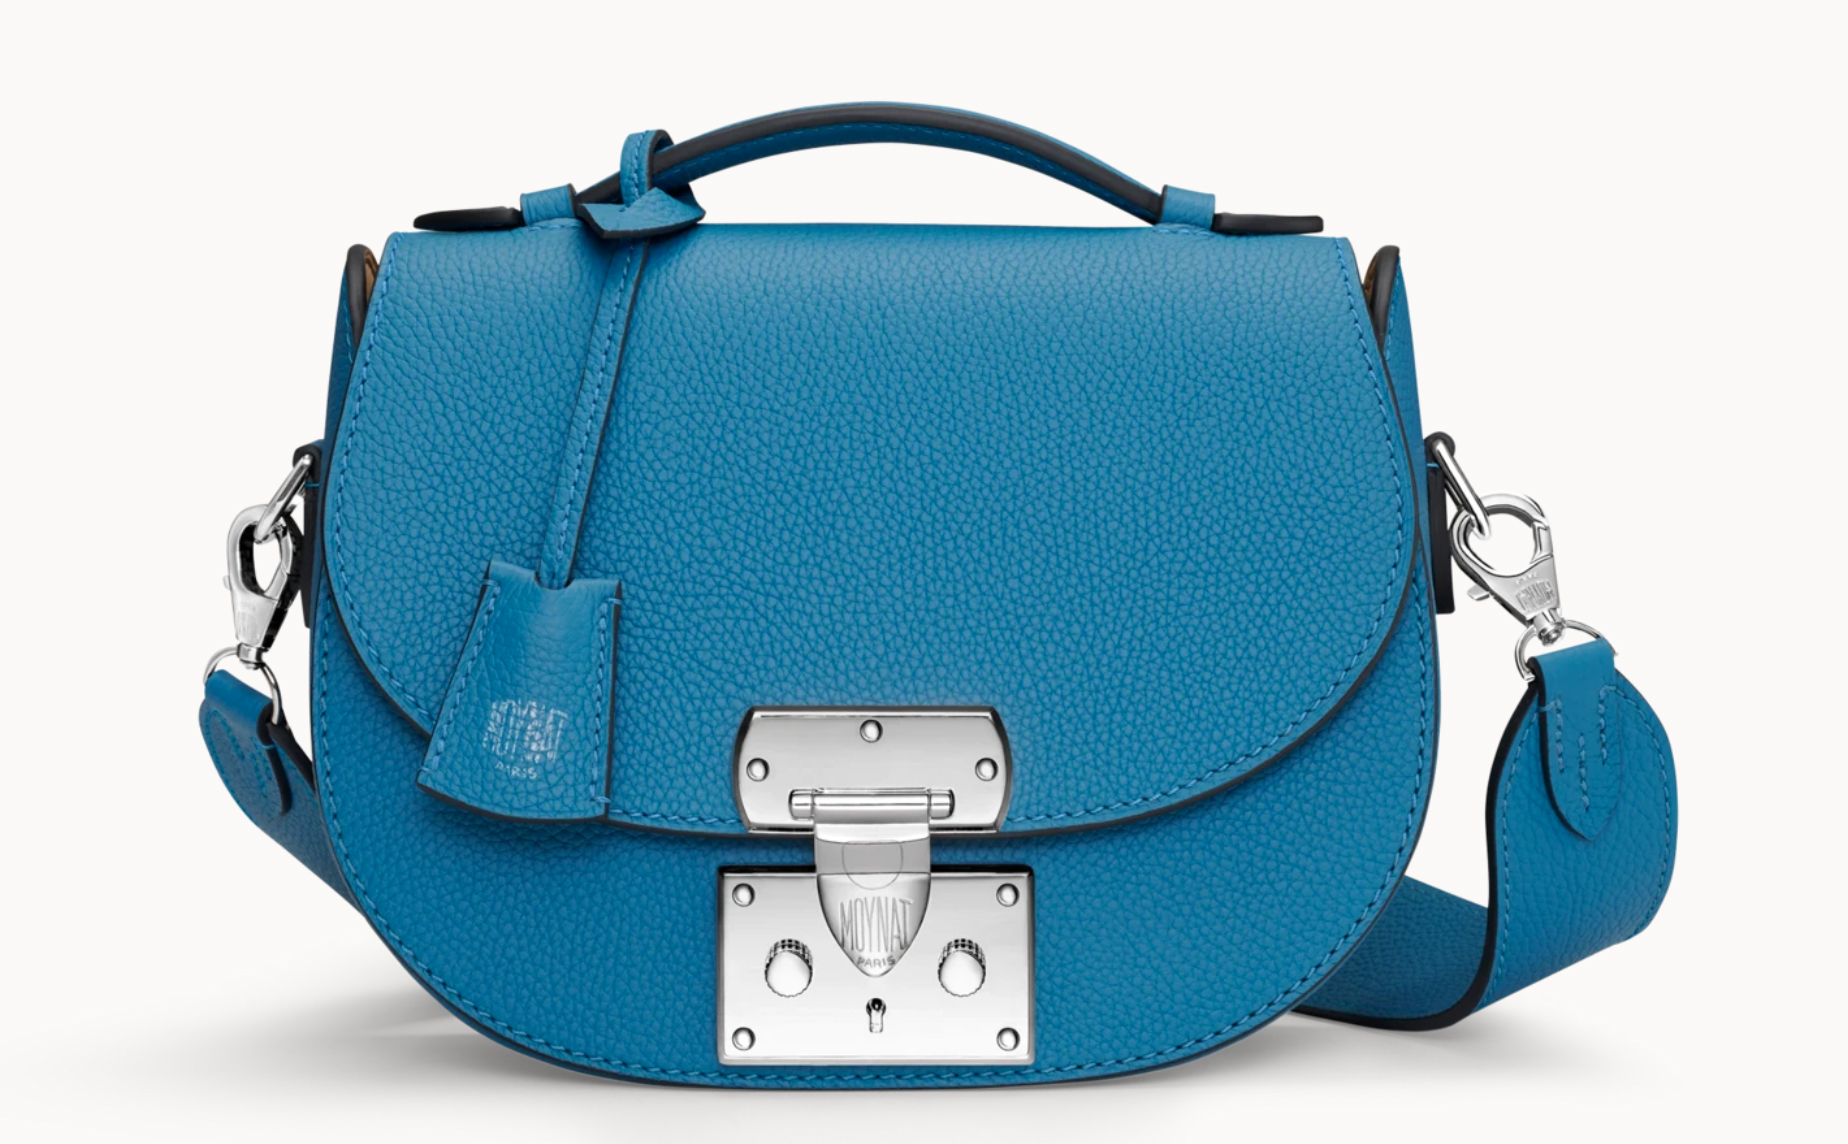 Brand new limited edition Moynat Mignon handbag crossbody in